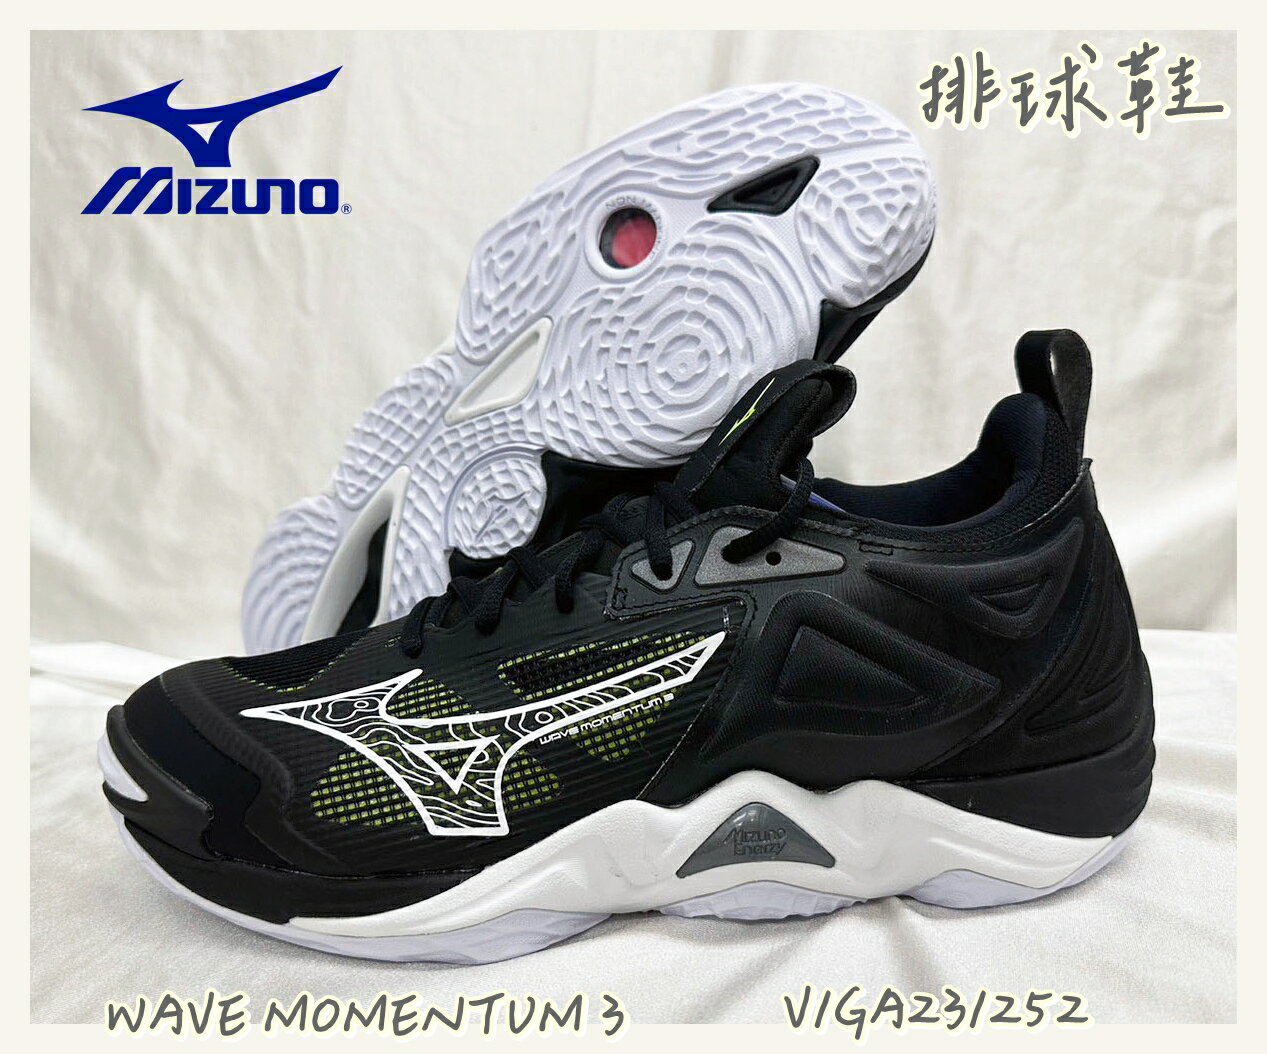 大自在 MIZUNO 美津濃 排球鞋 WAVE MOMENTUM 3 黑白綠 V1GA231252